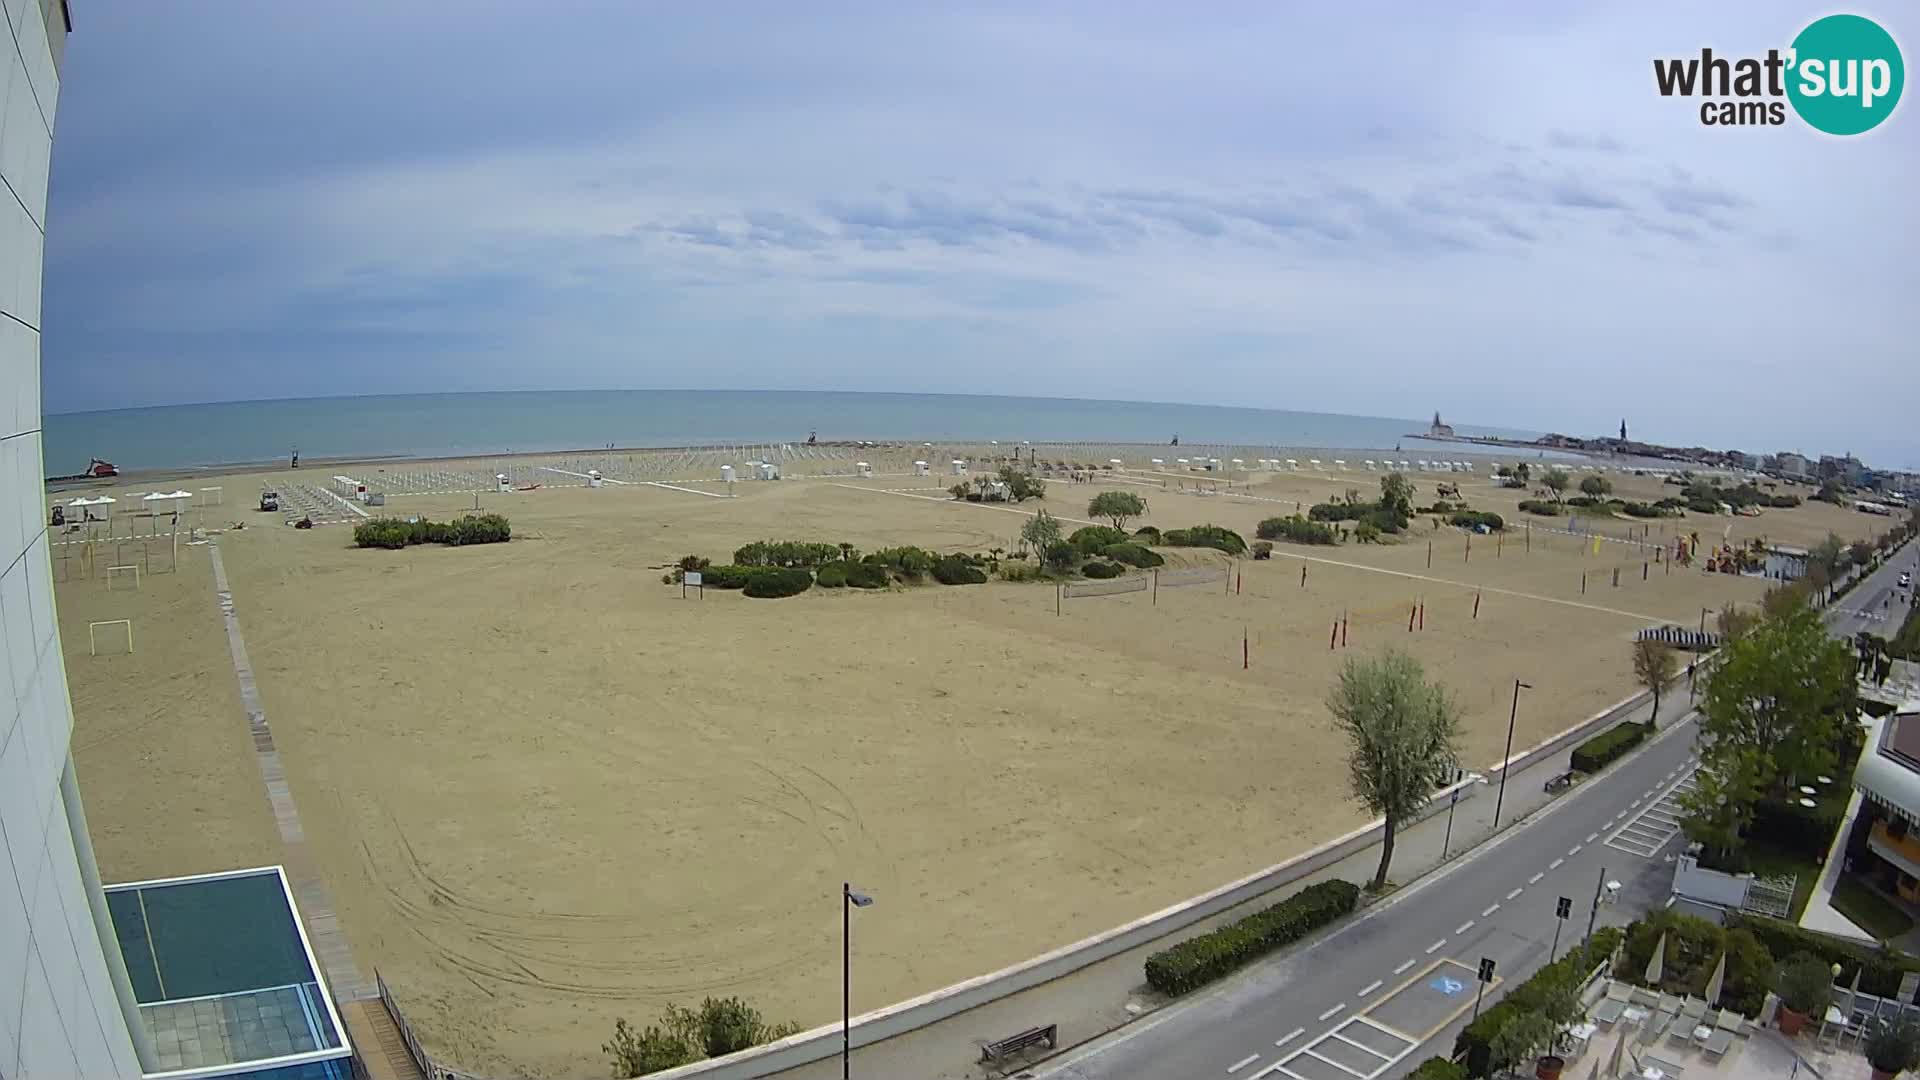 Hotel Panoramic dal vivo Caorle spiaggia Levante webcam